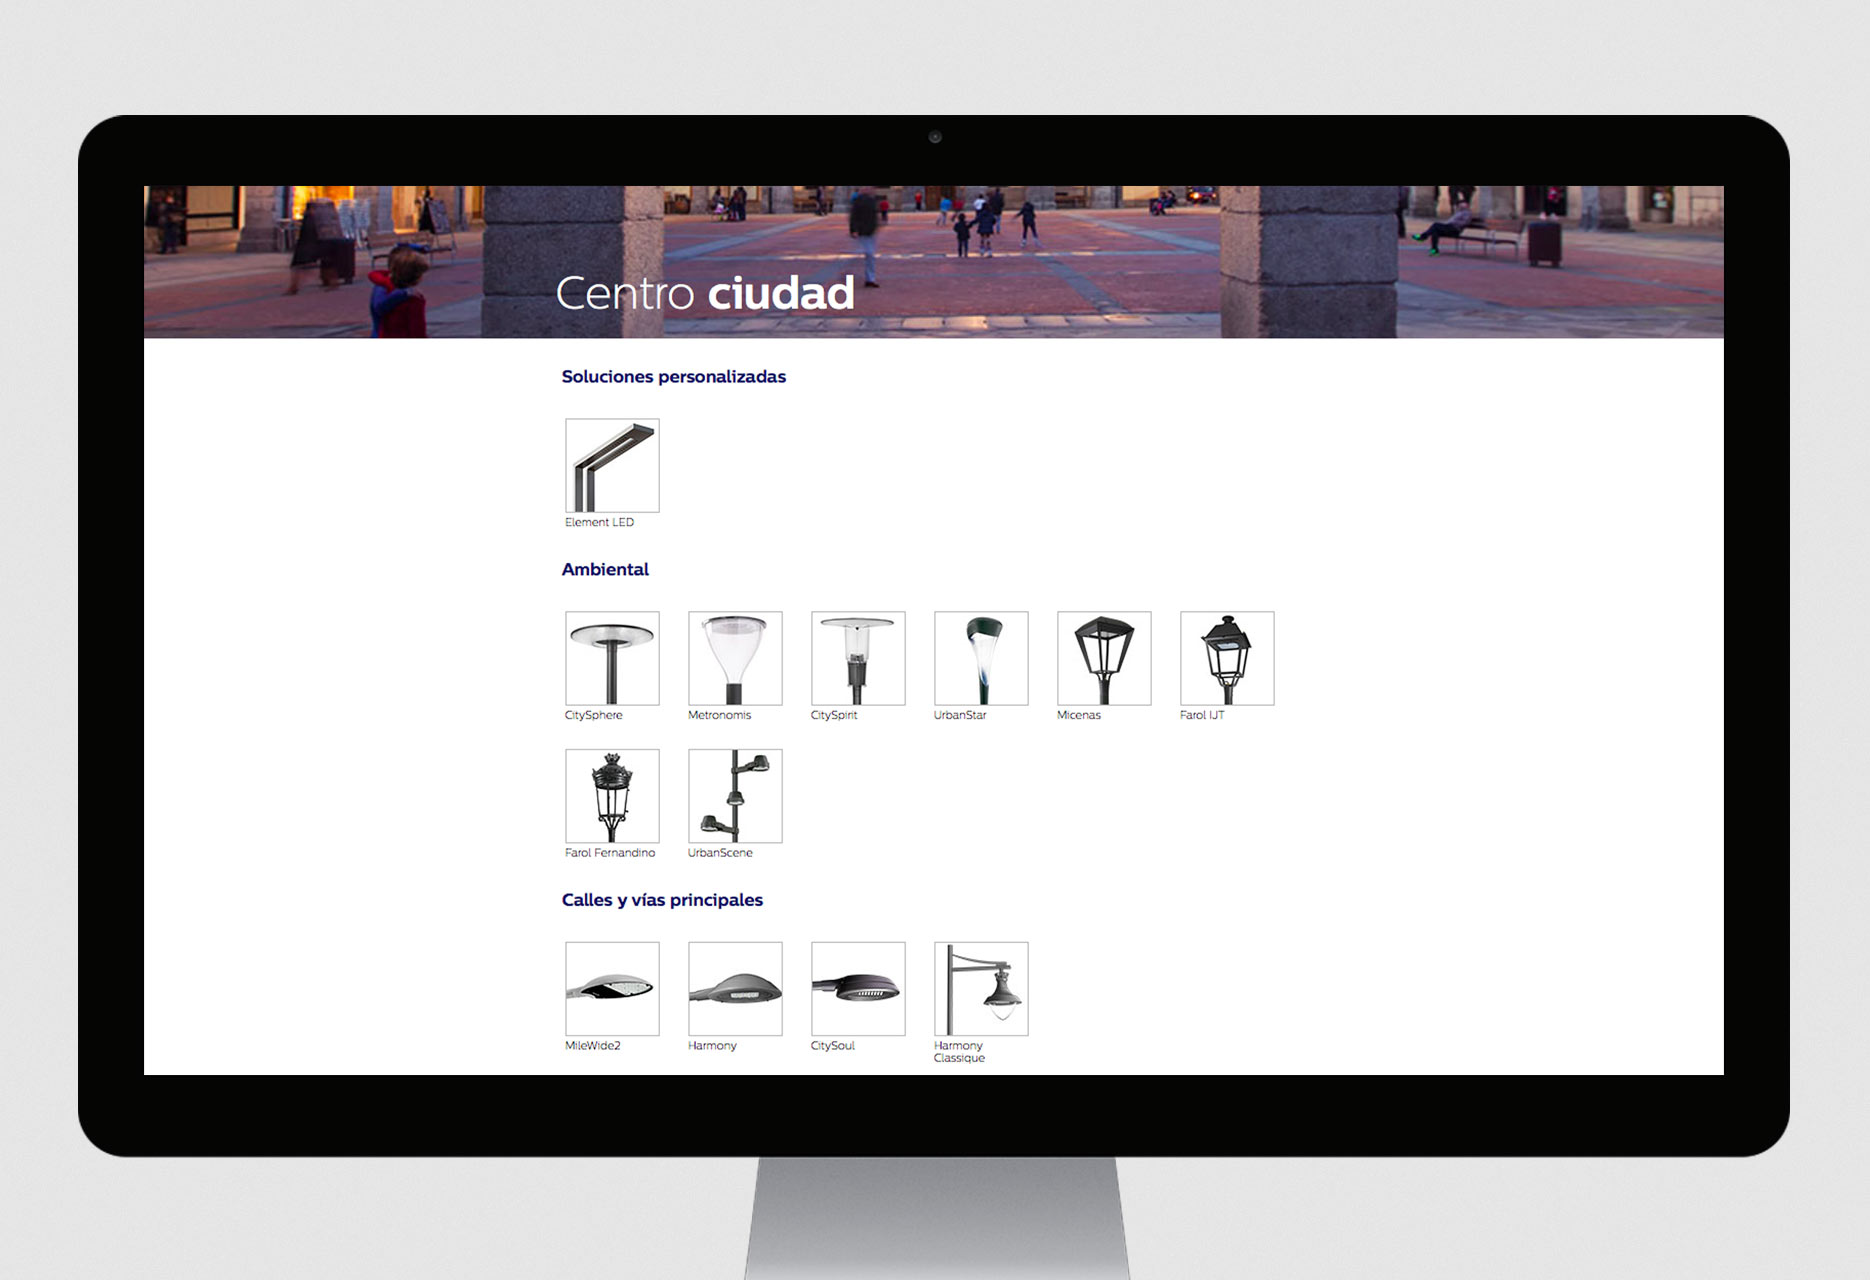 Catálogo web on-line E-Catalogo Philips - desarrollo web / gestor de contenidos